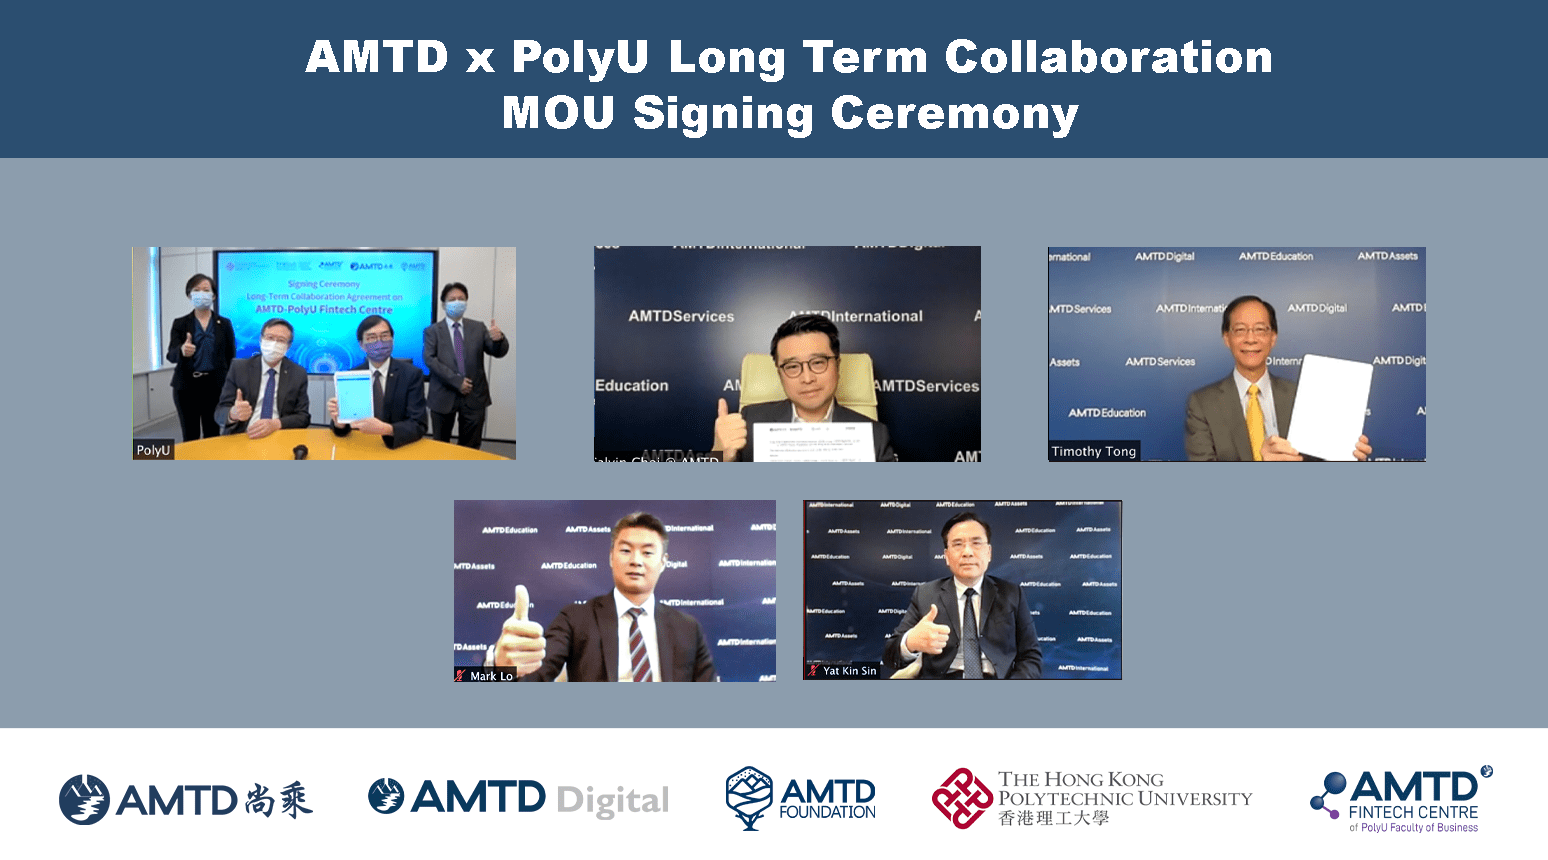 AMTD Education | AMTD and PolyU entered into Long-Term Collaborative Partnership